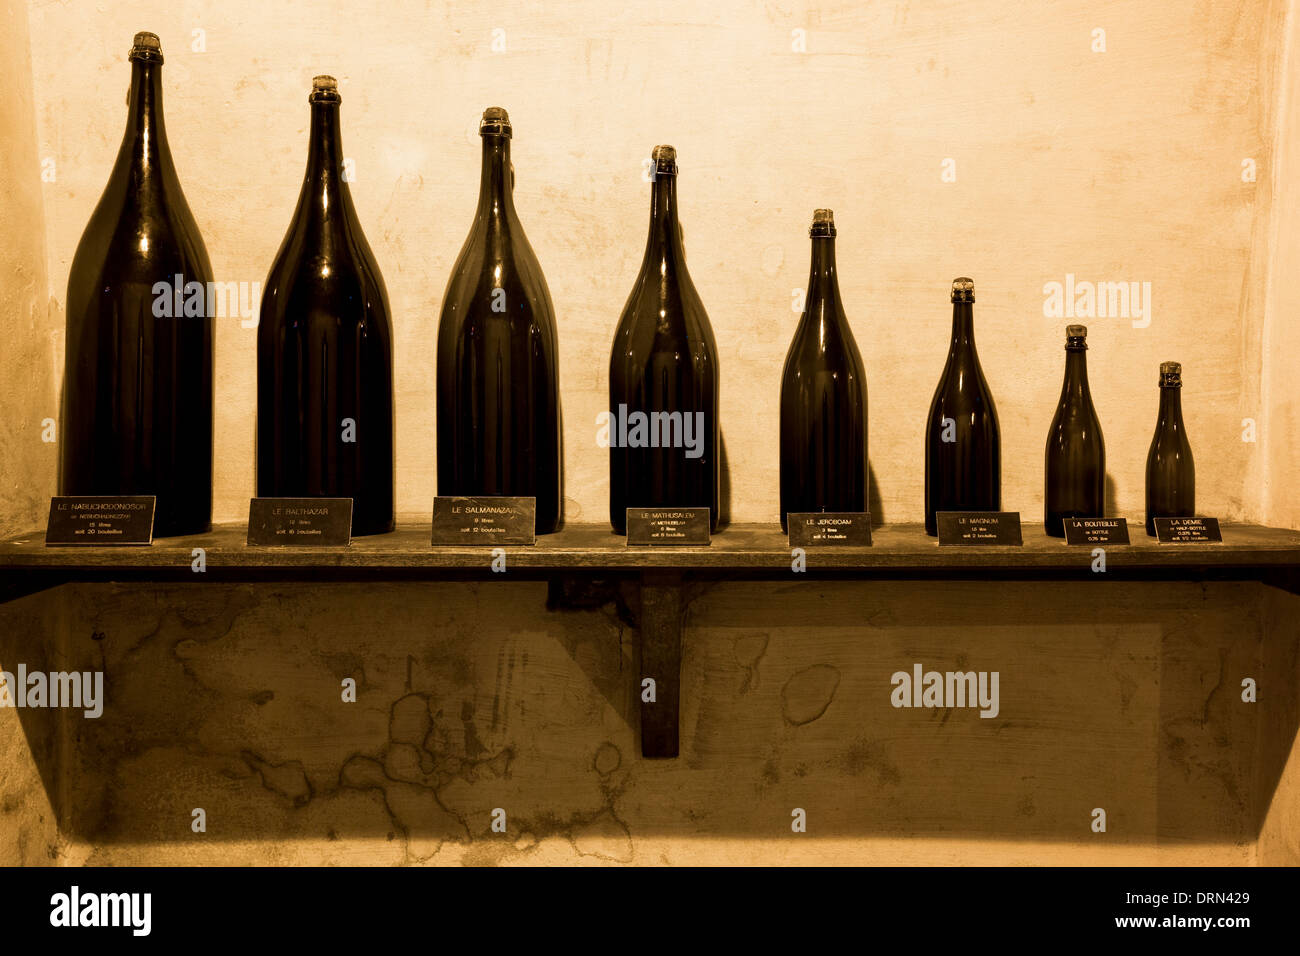 Demie, Magnum, Geroboamo, Methusalem, Balthazar, Salmanazar, Nabucodònosor  bottiglie di Champagne Taittinger a Reims, Francia Foto stock - Alamy